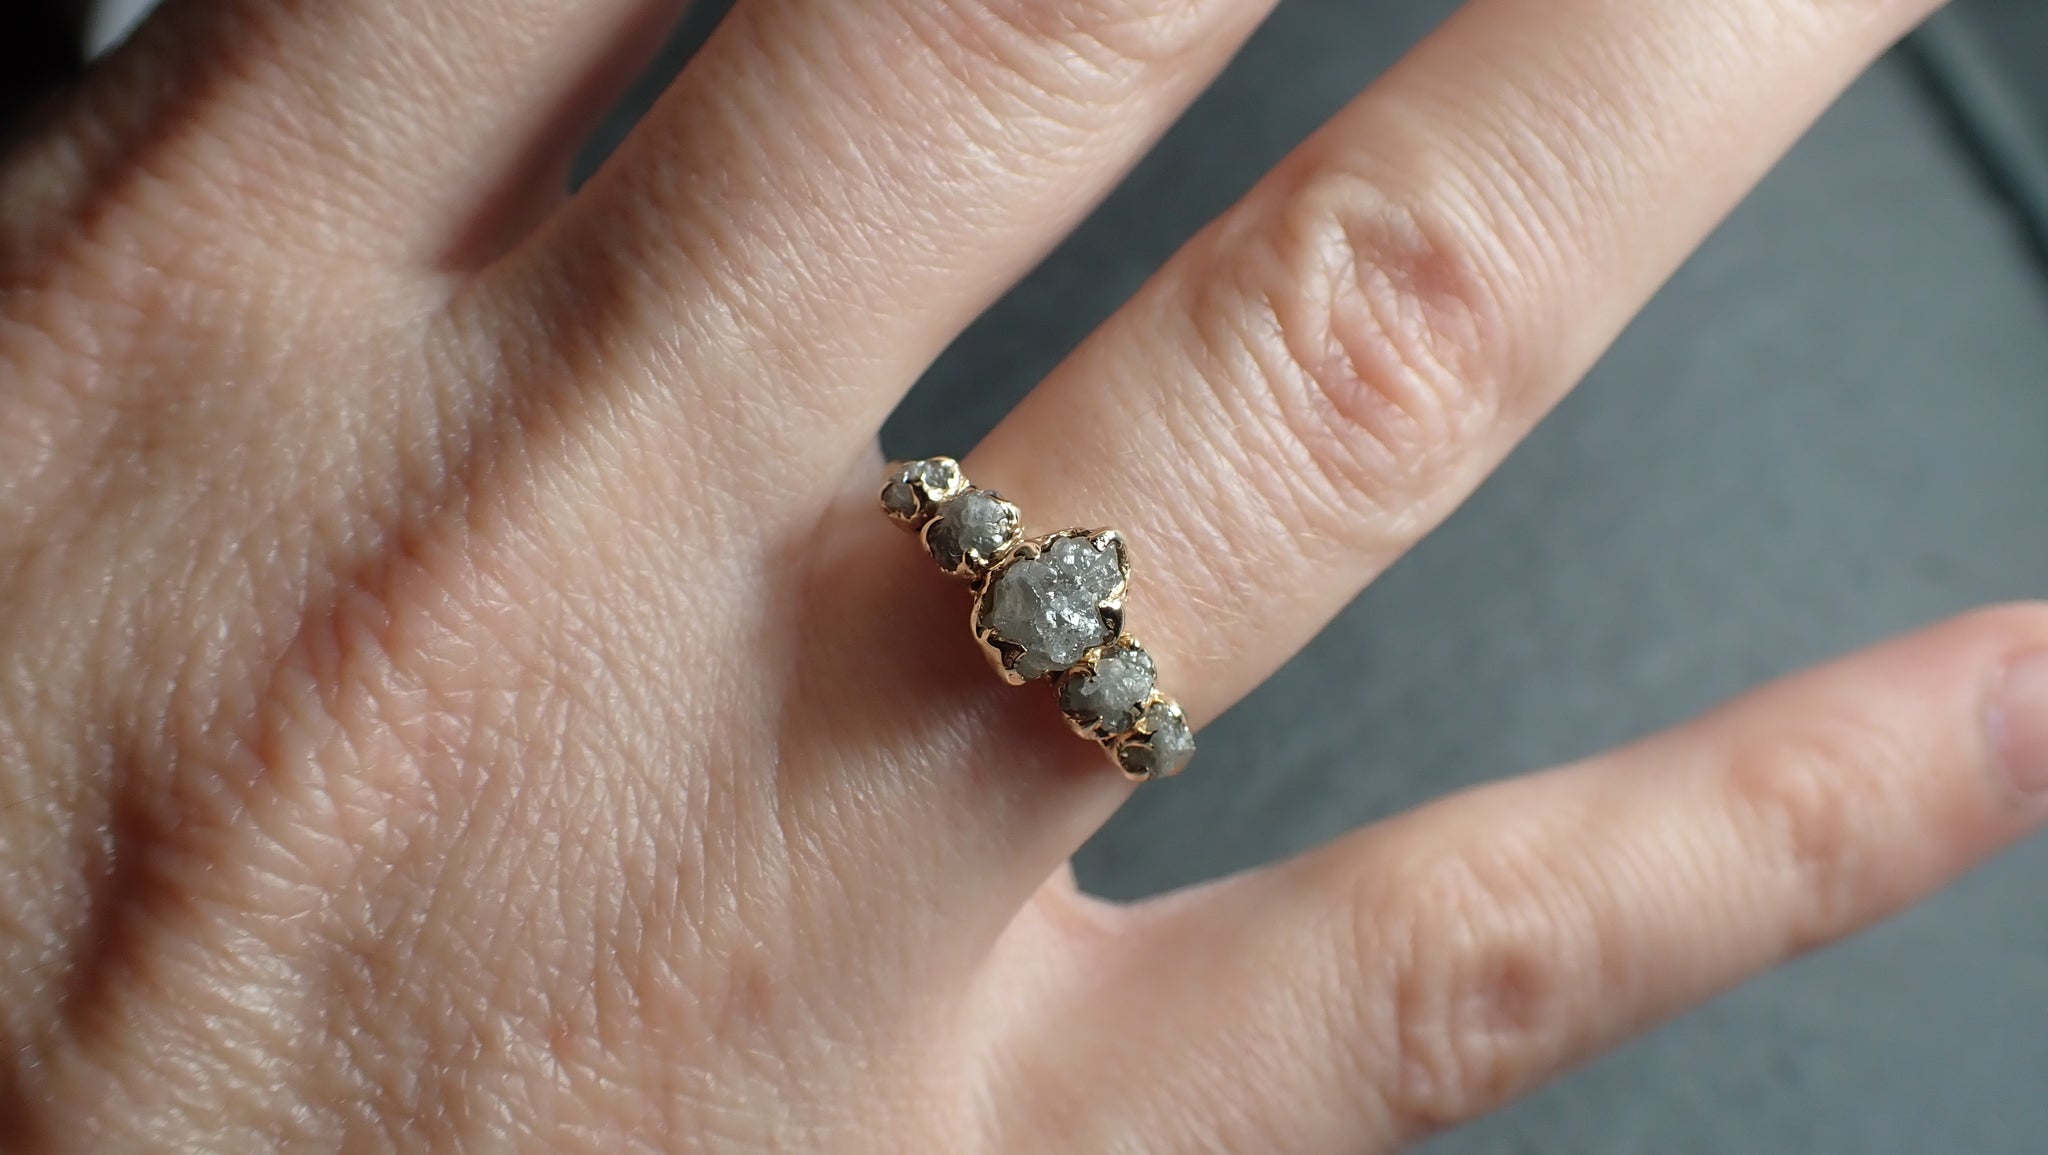 CUSTOM Raw Diamond Rose gold multi stone Engagement Ring Rough Gold Wedding Delicate Ring diamond Wedding Ring Rough C2550